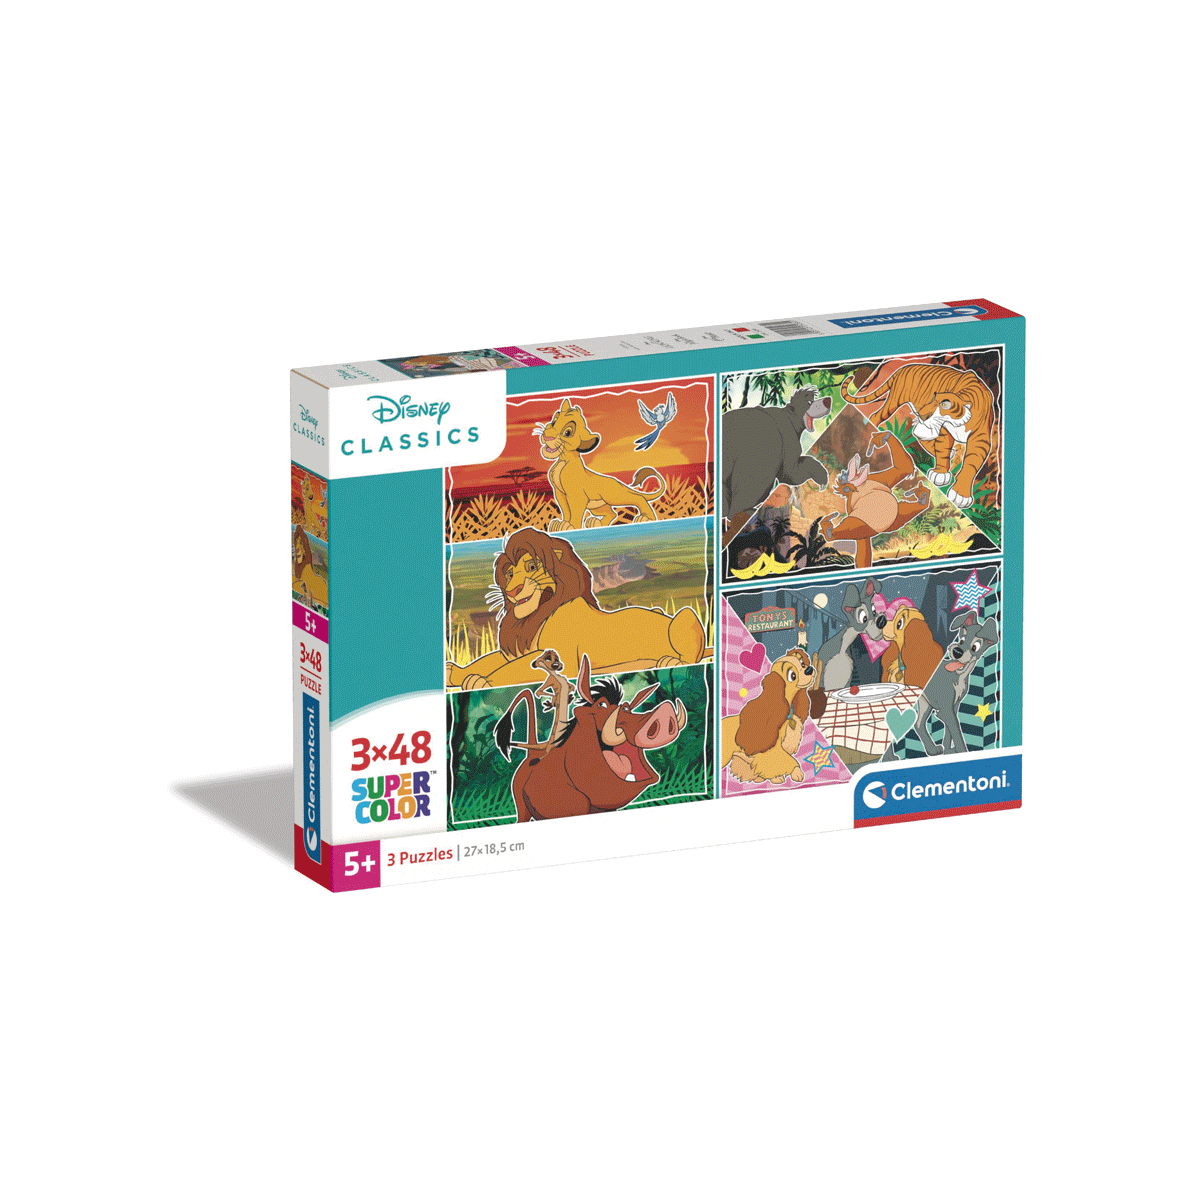 Clementoni supercolor puzzle - disney classics - 3x48 pezzi, puzzle bambini 5 anni - CLEMENTONI